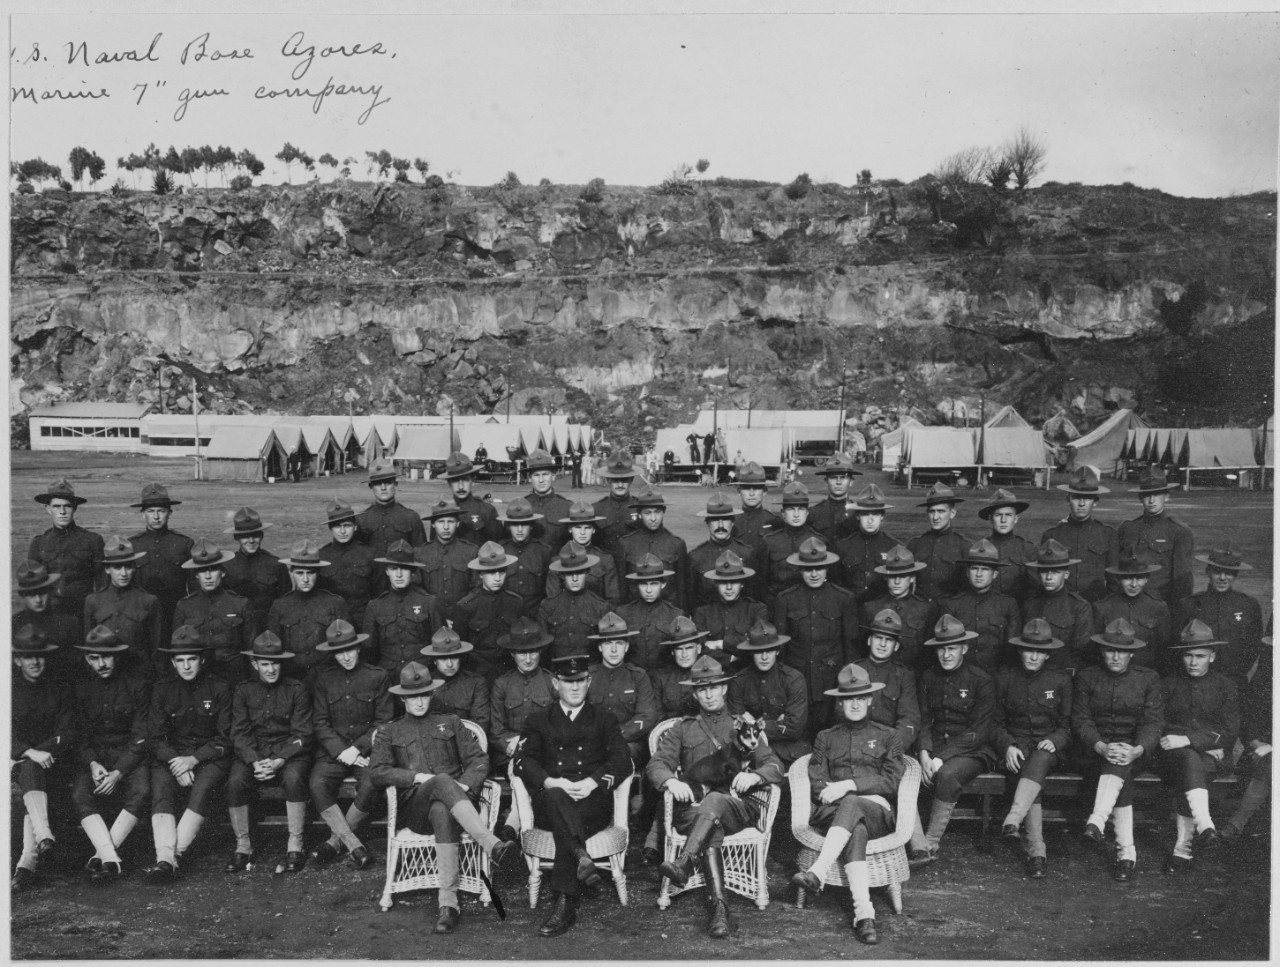 U.S. Naval Base, Ponta Delgada, Azores. Portugal Marine 7" gun company. 1918